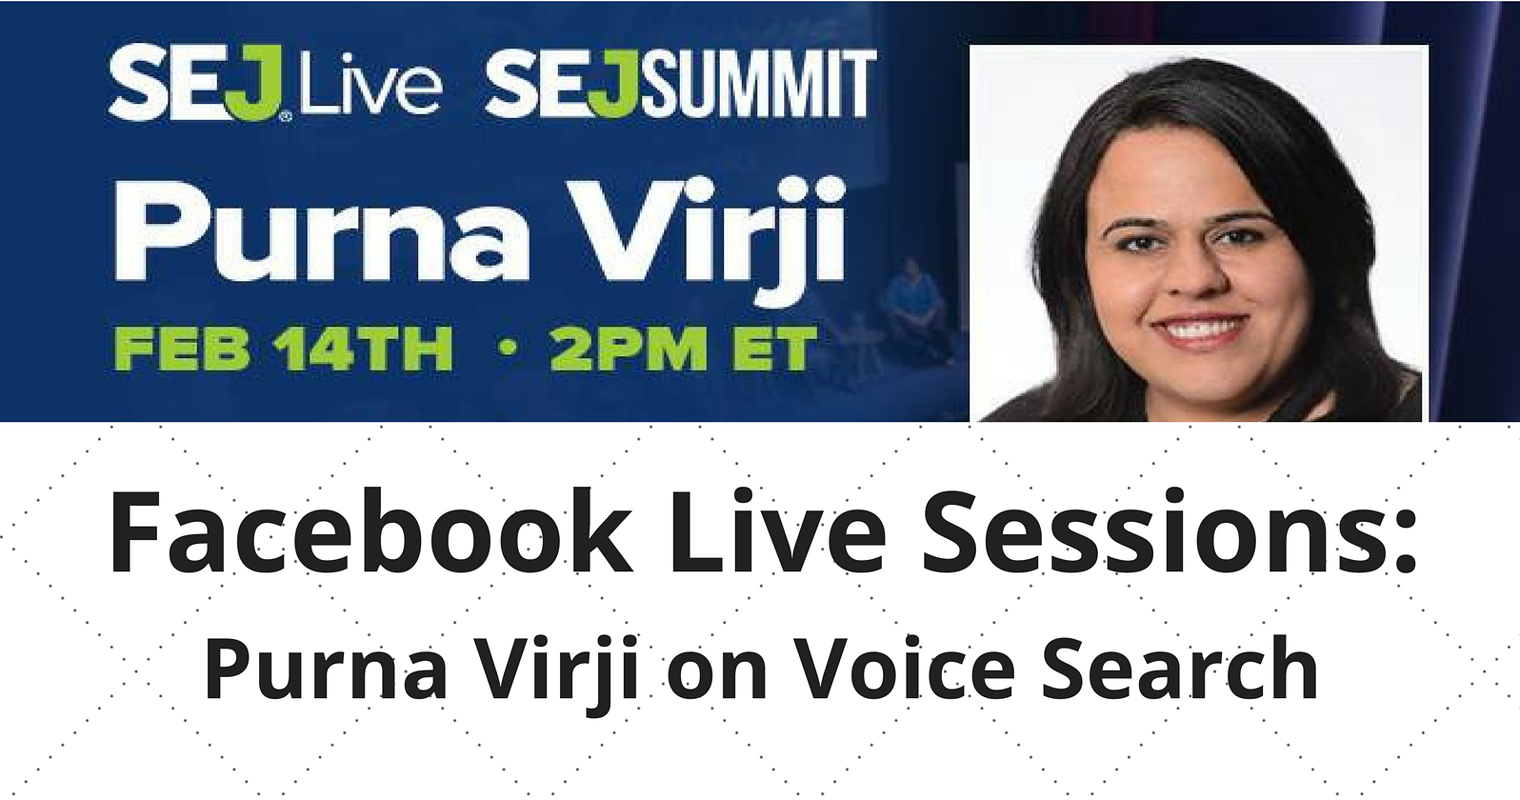 SEJ Live: Purna Virji on Voice Search